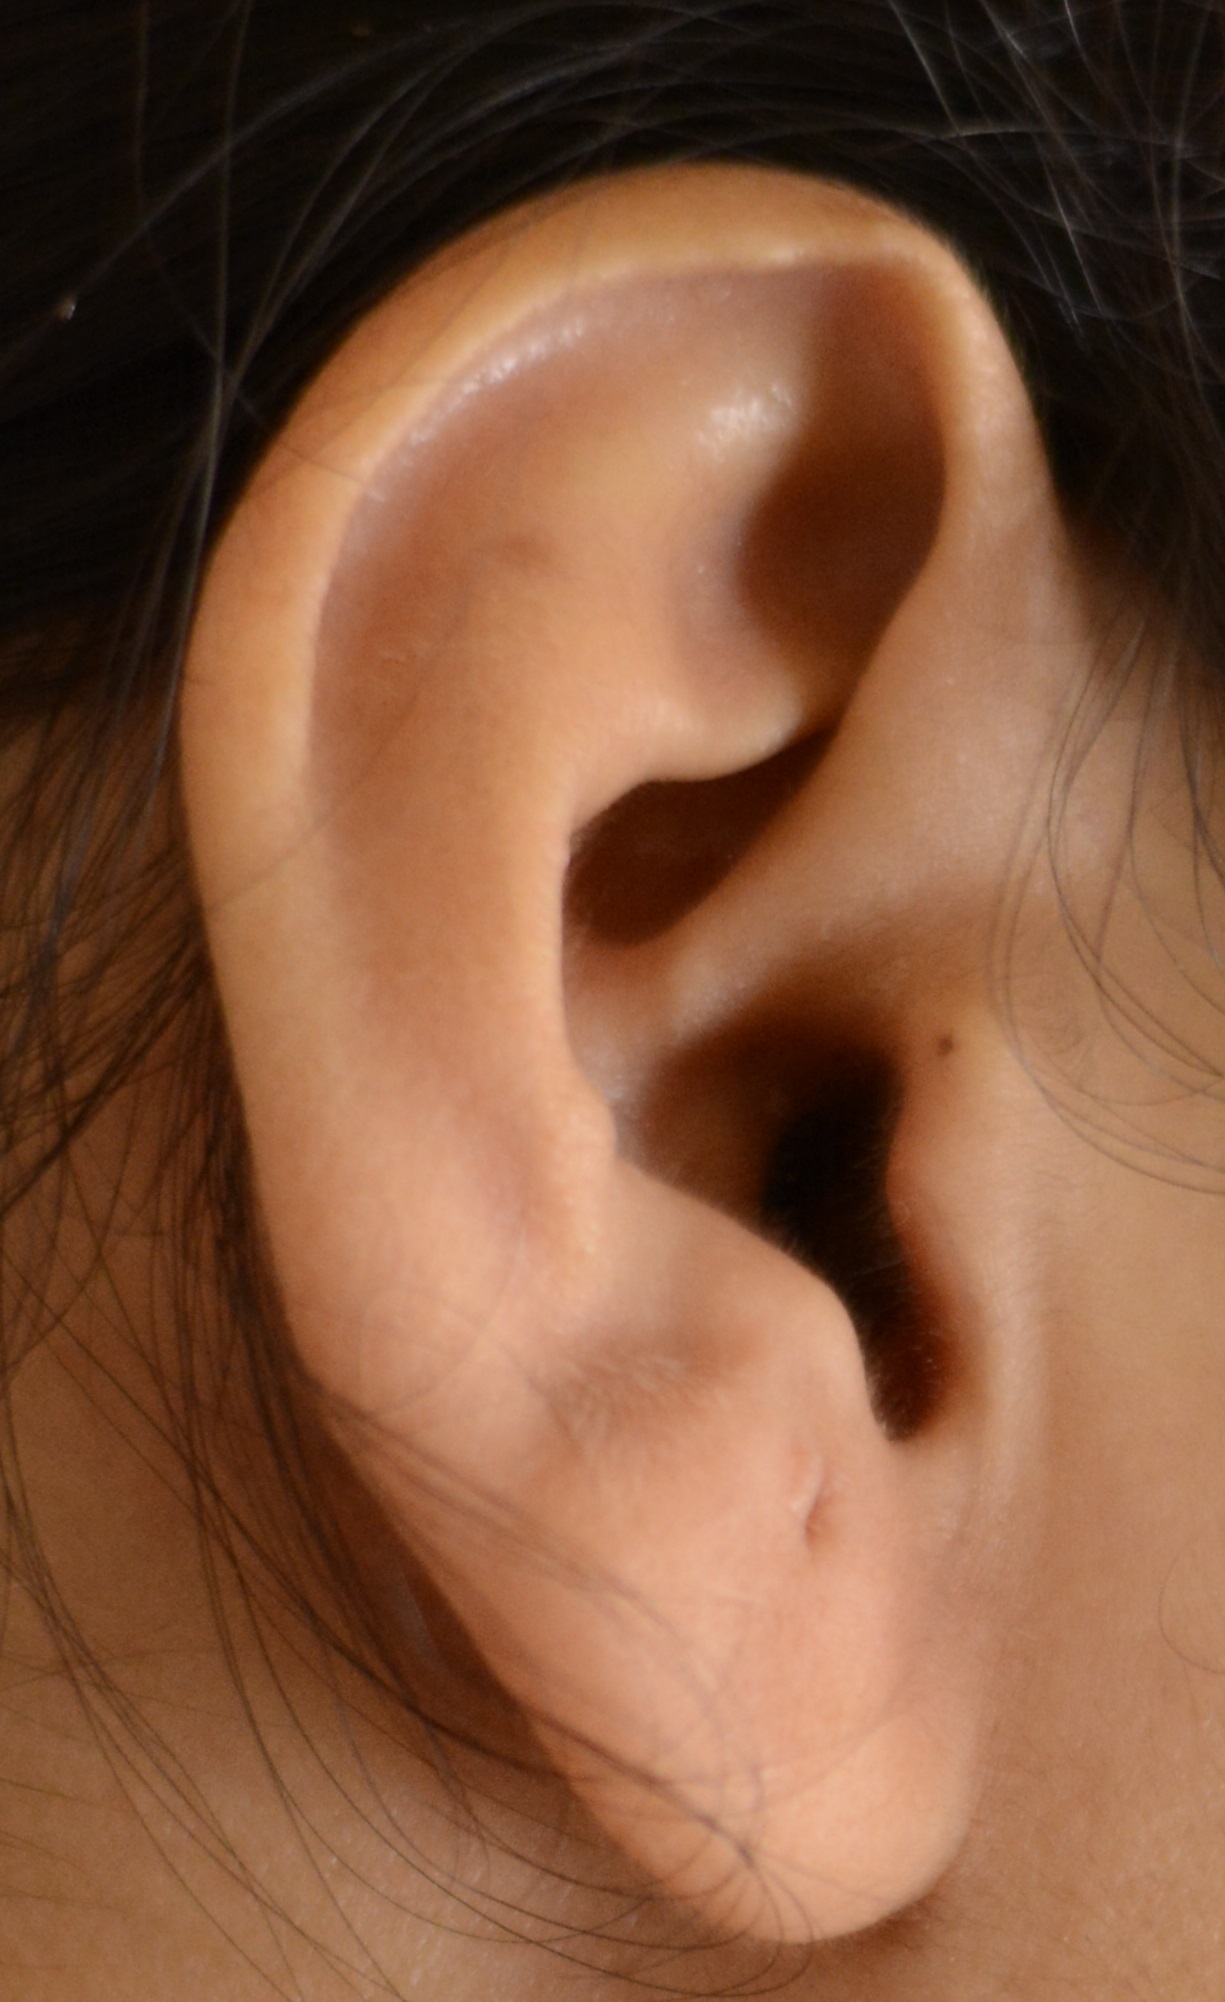 Human Ear.jpg. 